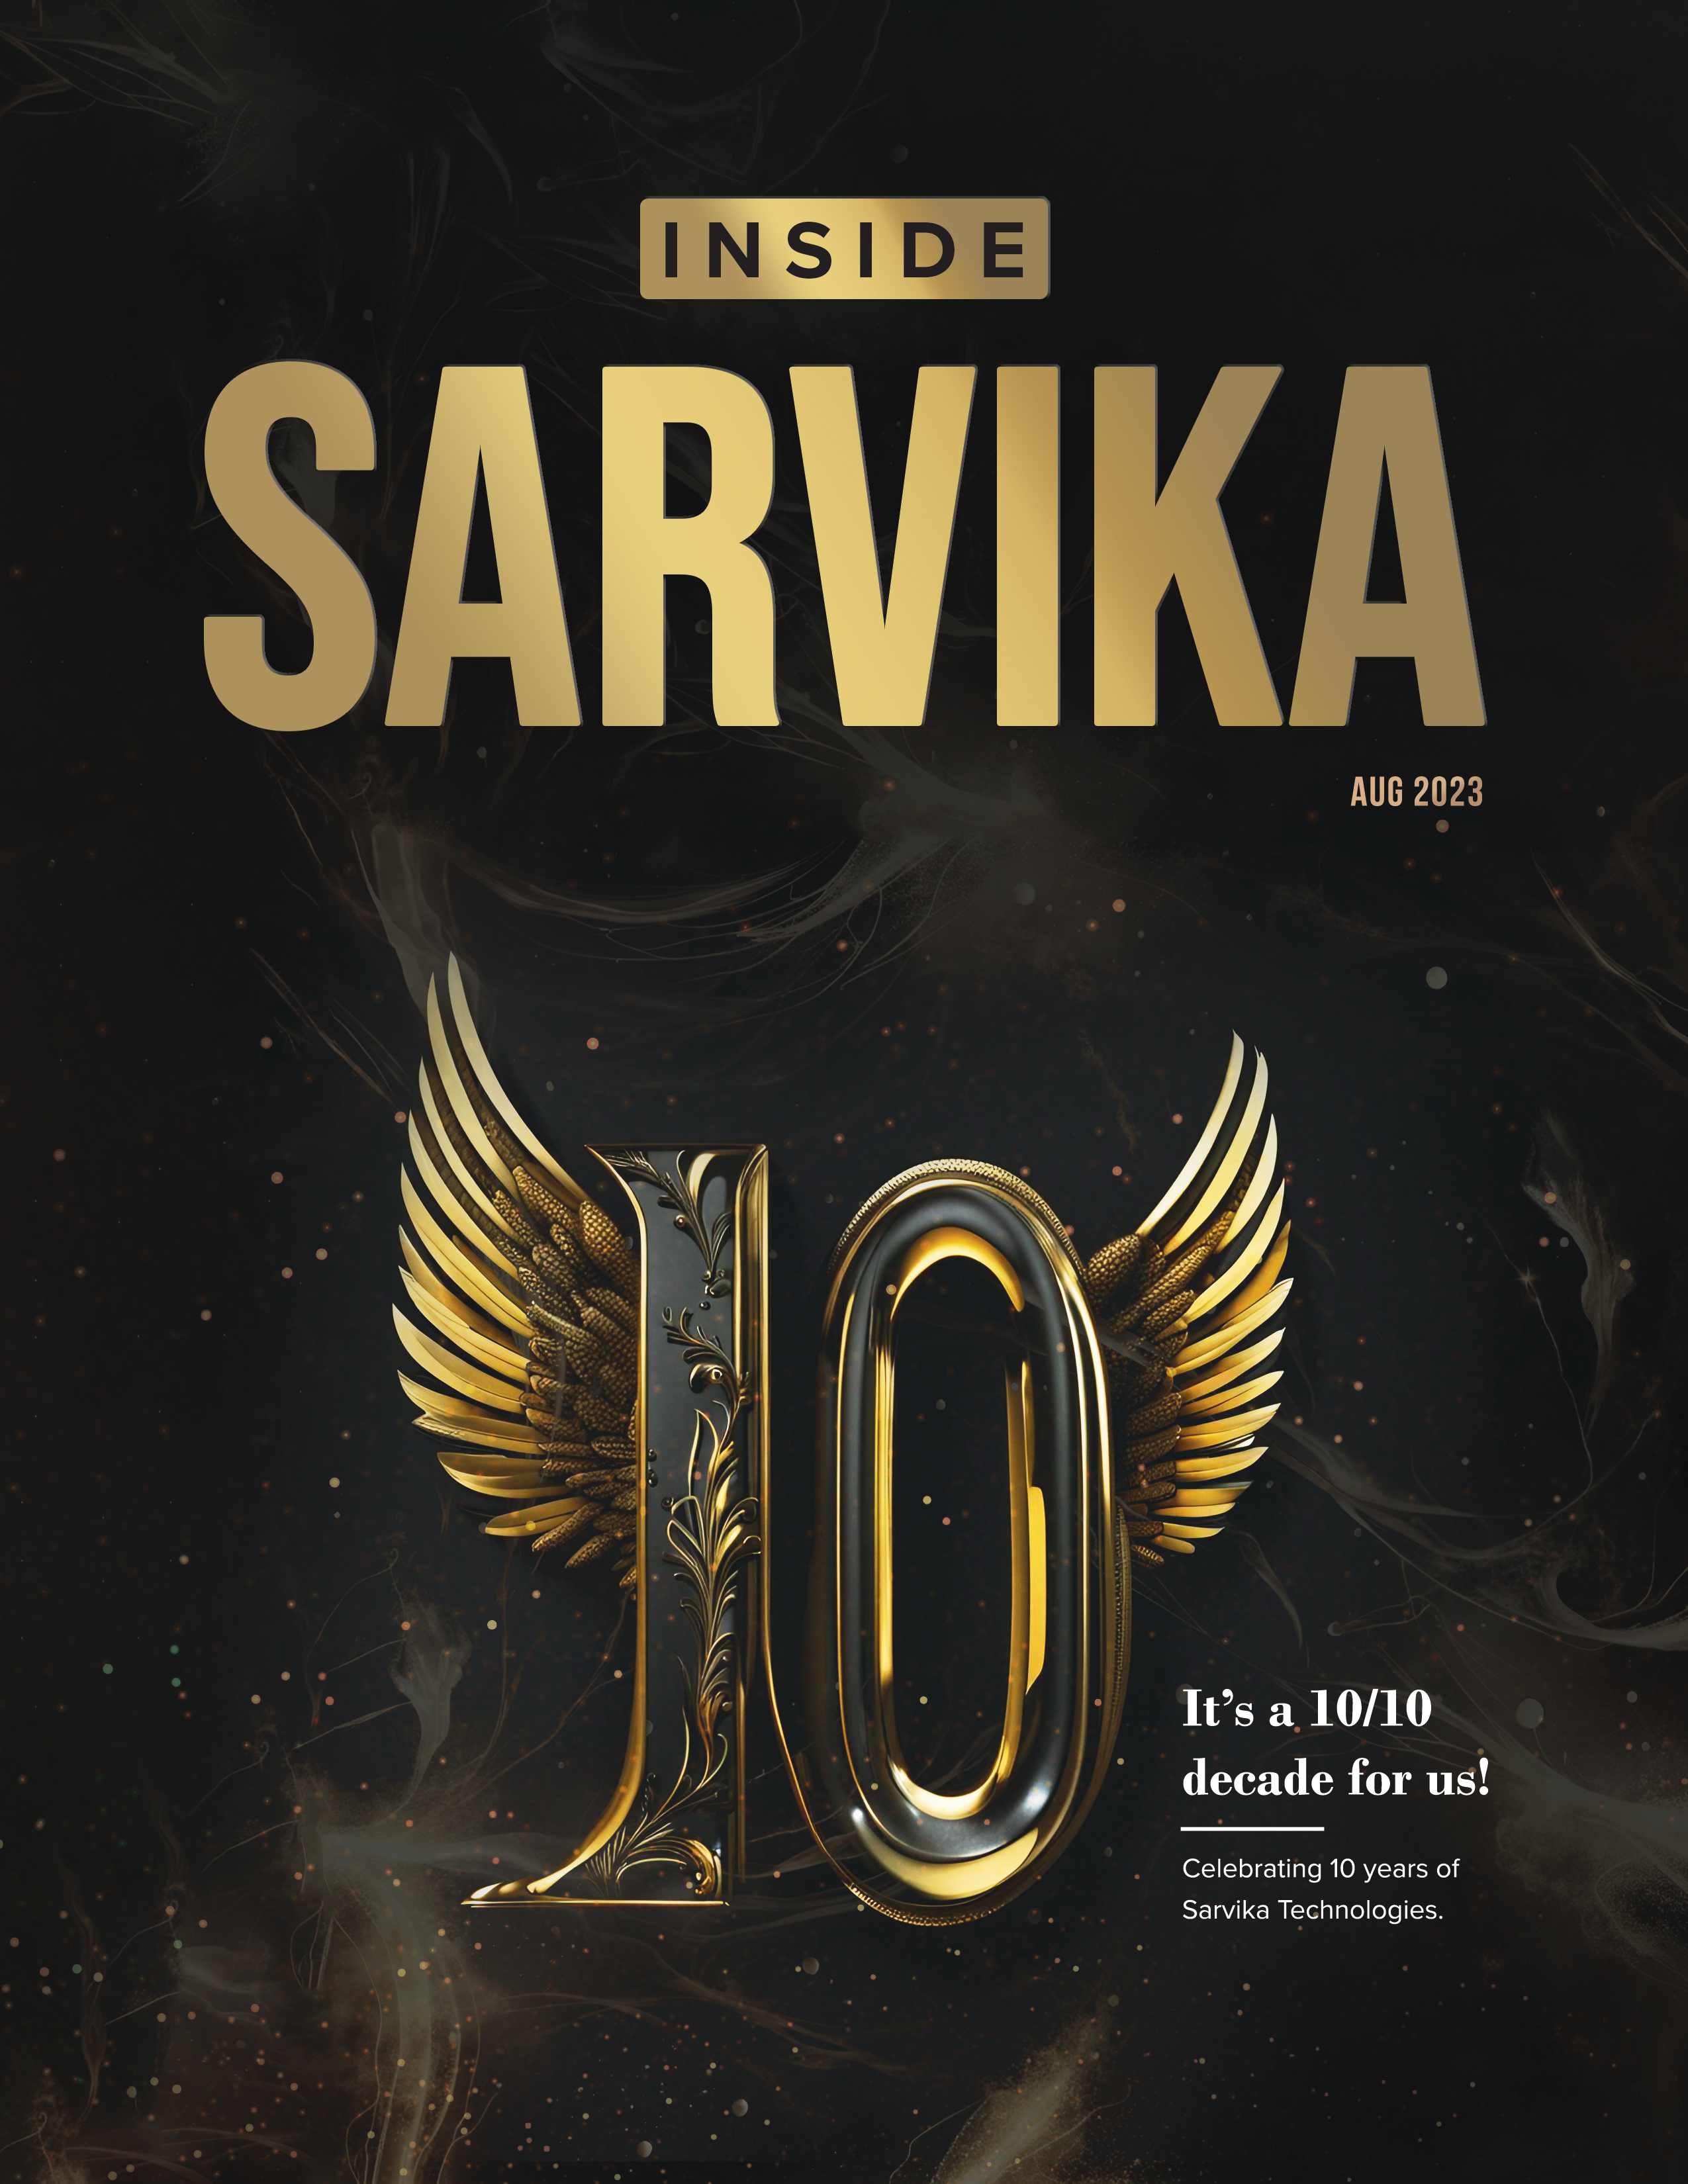 Inside Sarvika magazine cover